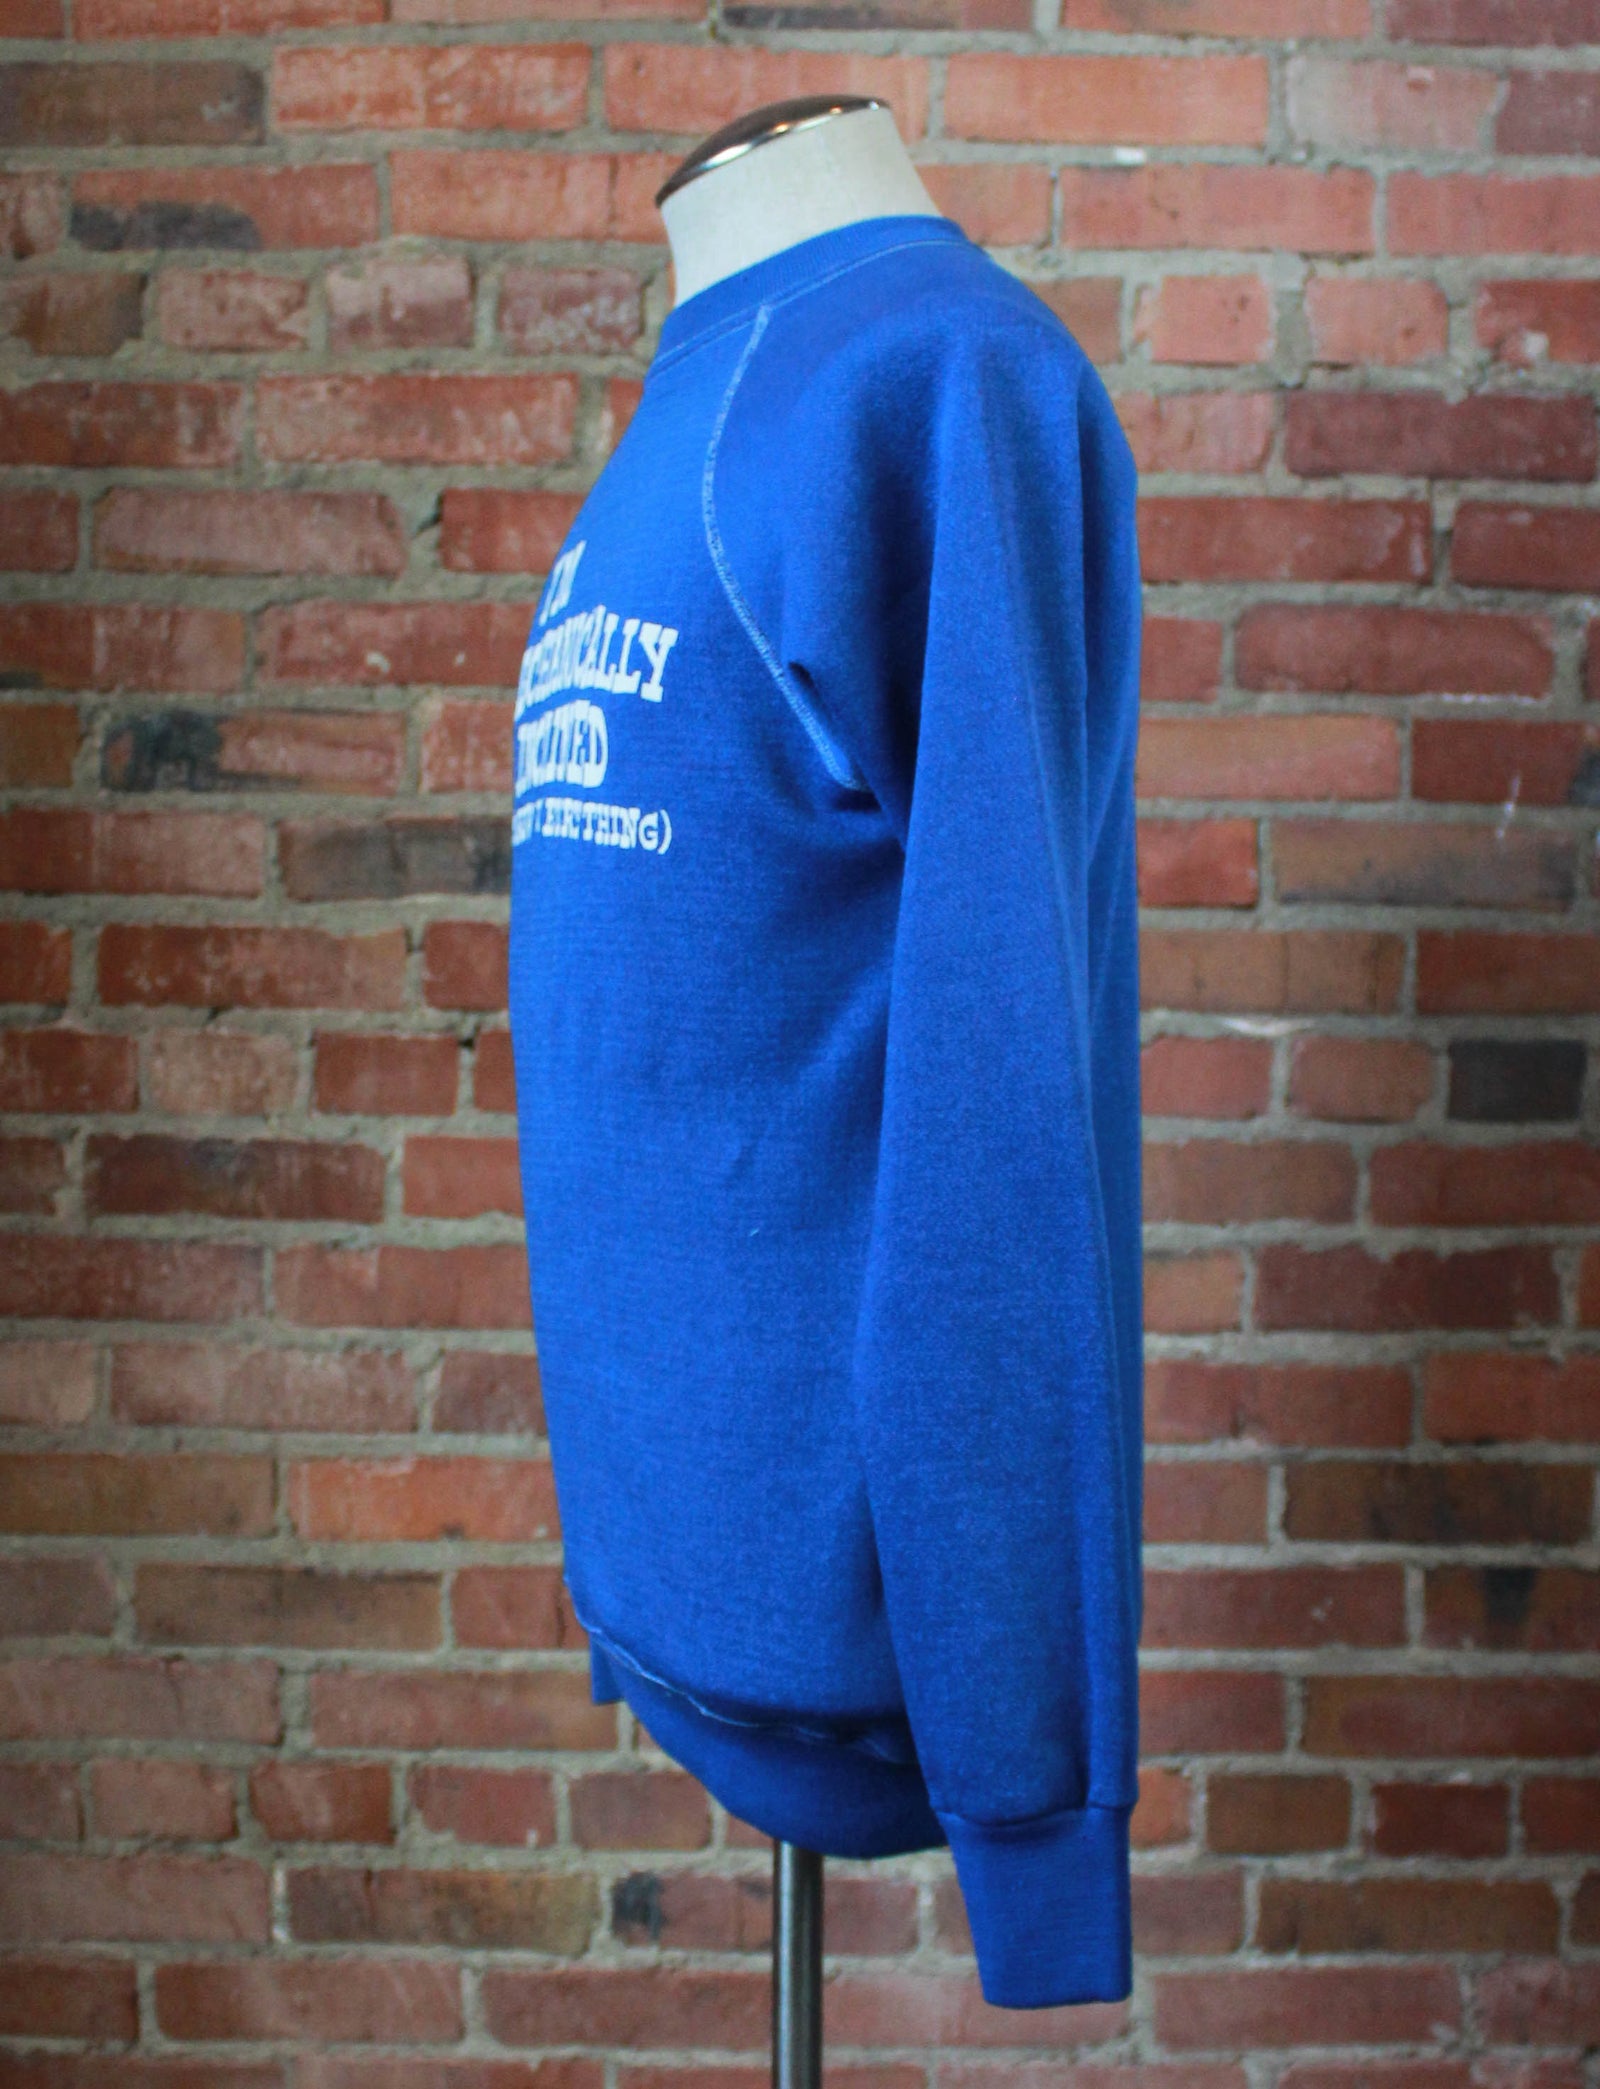 Vintage 80's I'm Mechanically Inclined Graphic Sweatshirt Crewneck Pullover Blue Unisex Medium 